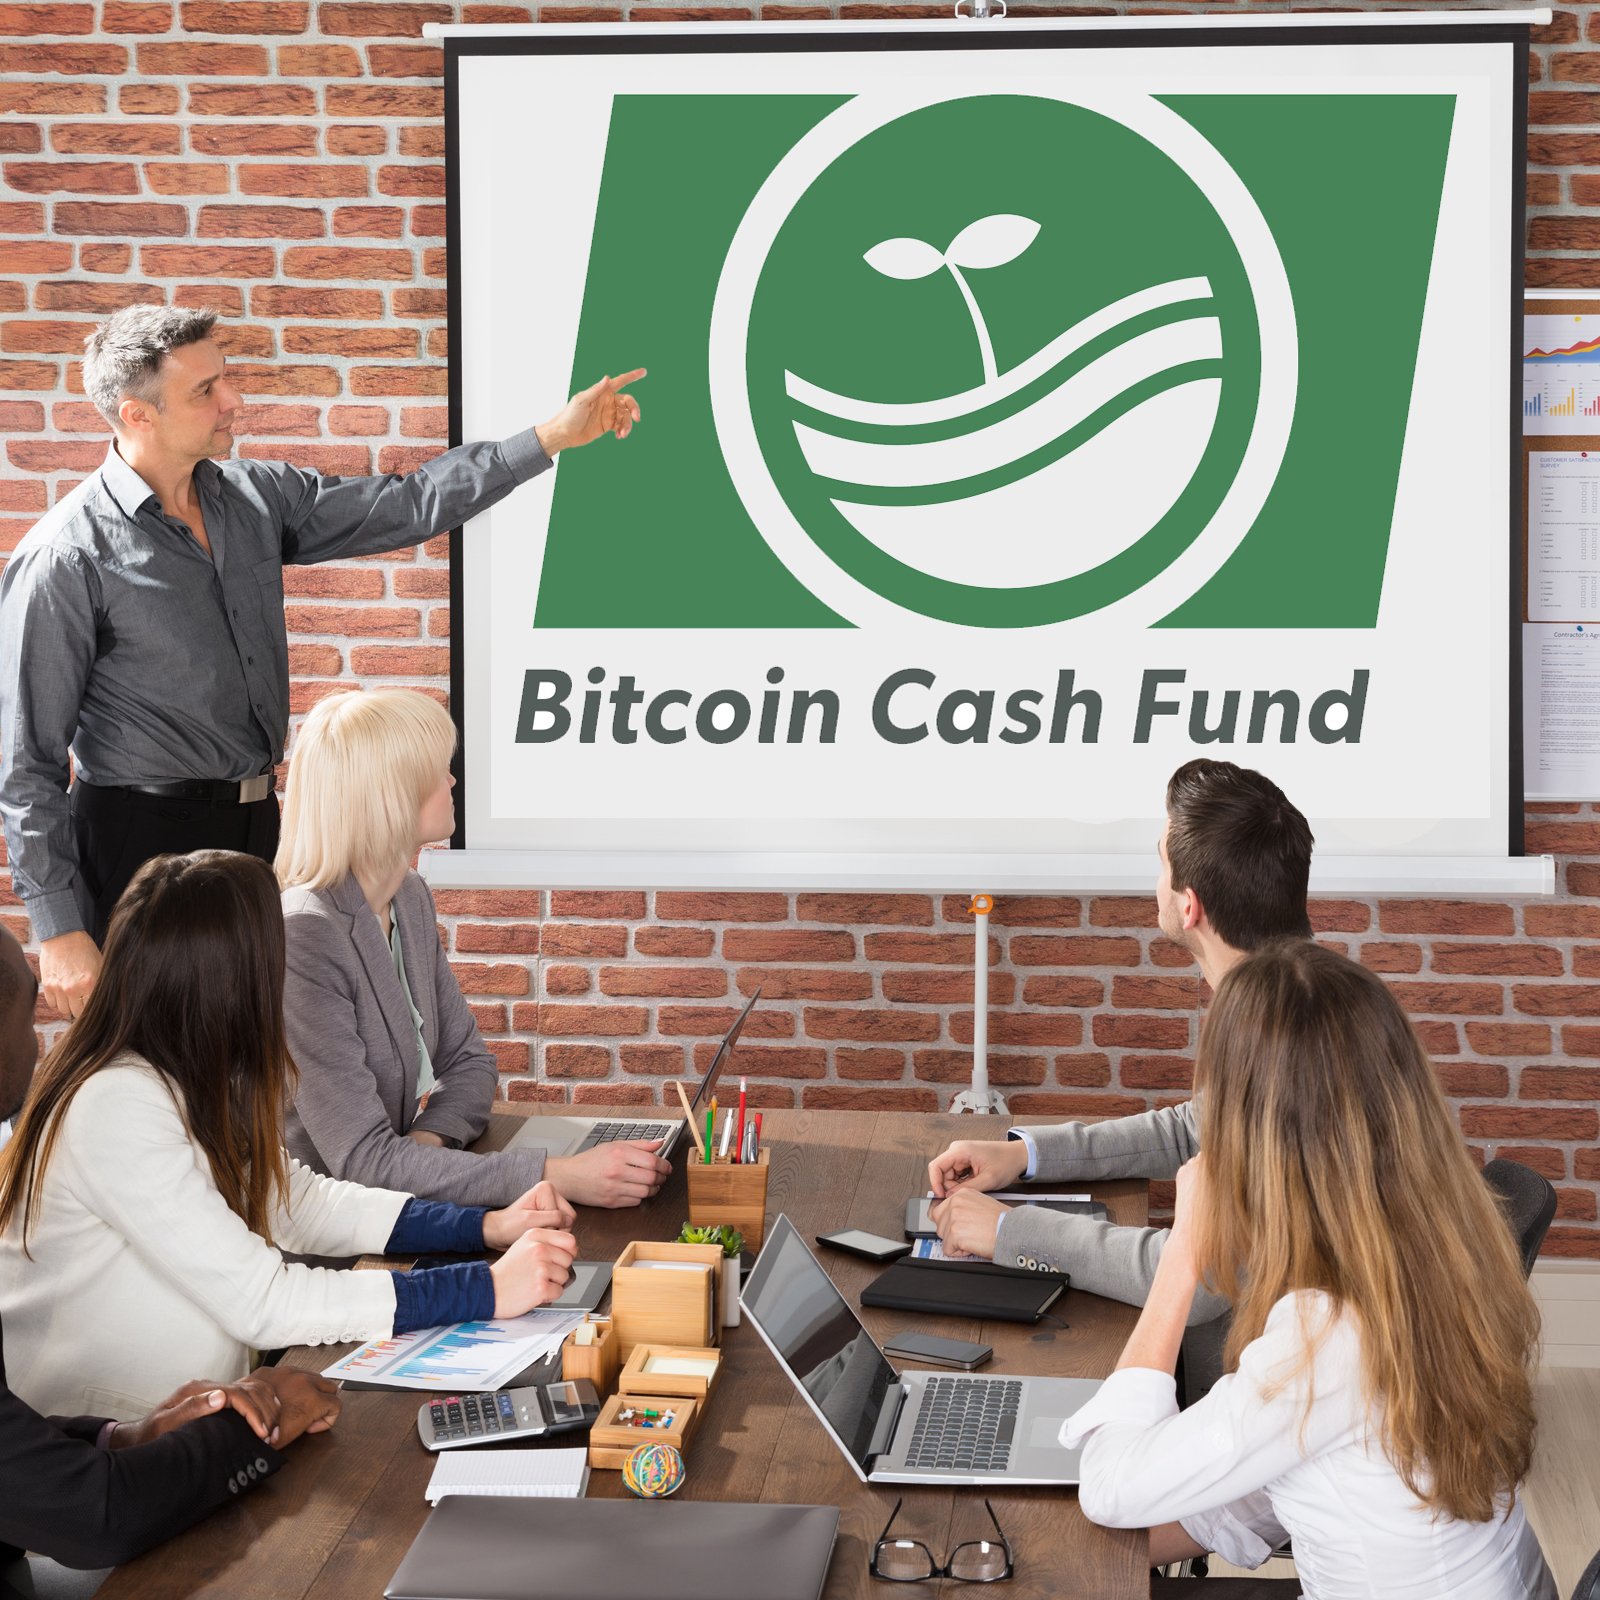 Bitcoin Cash Community Creates Grassroots Funding Initiative